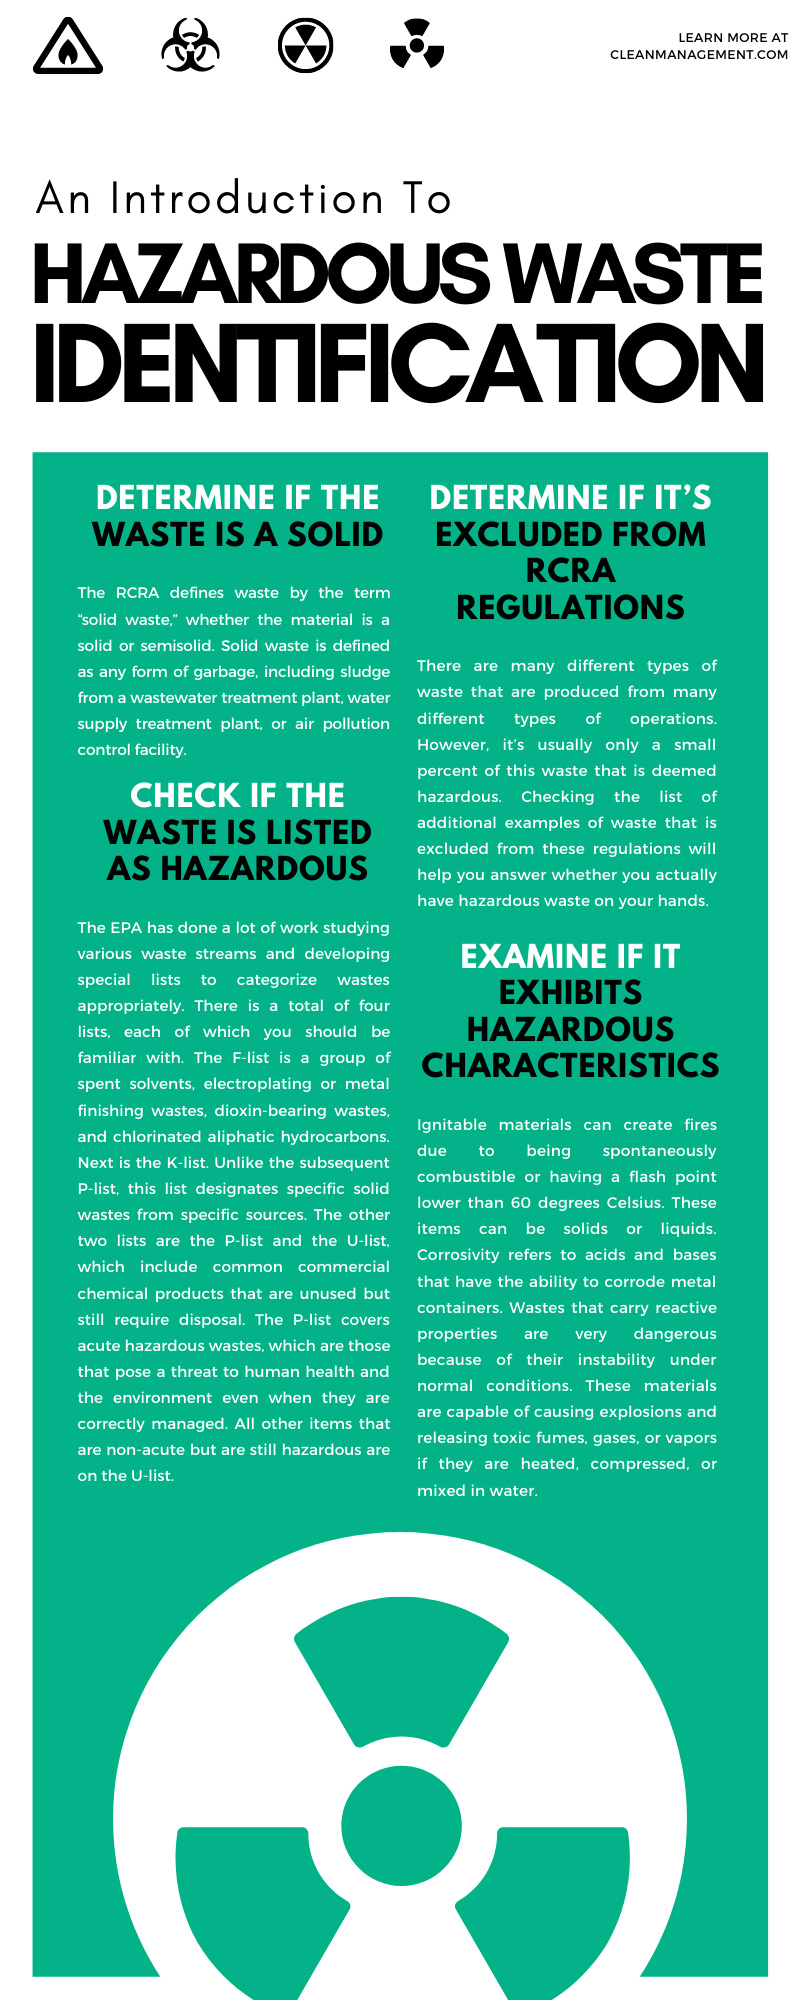 An Introduction To Hazardous Waste Identification